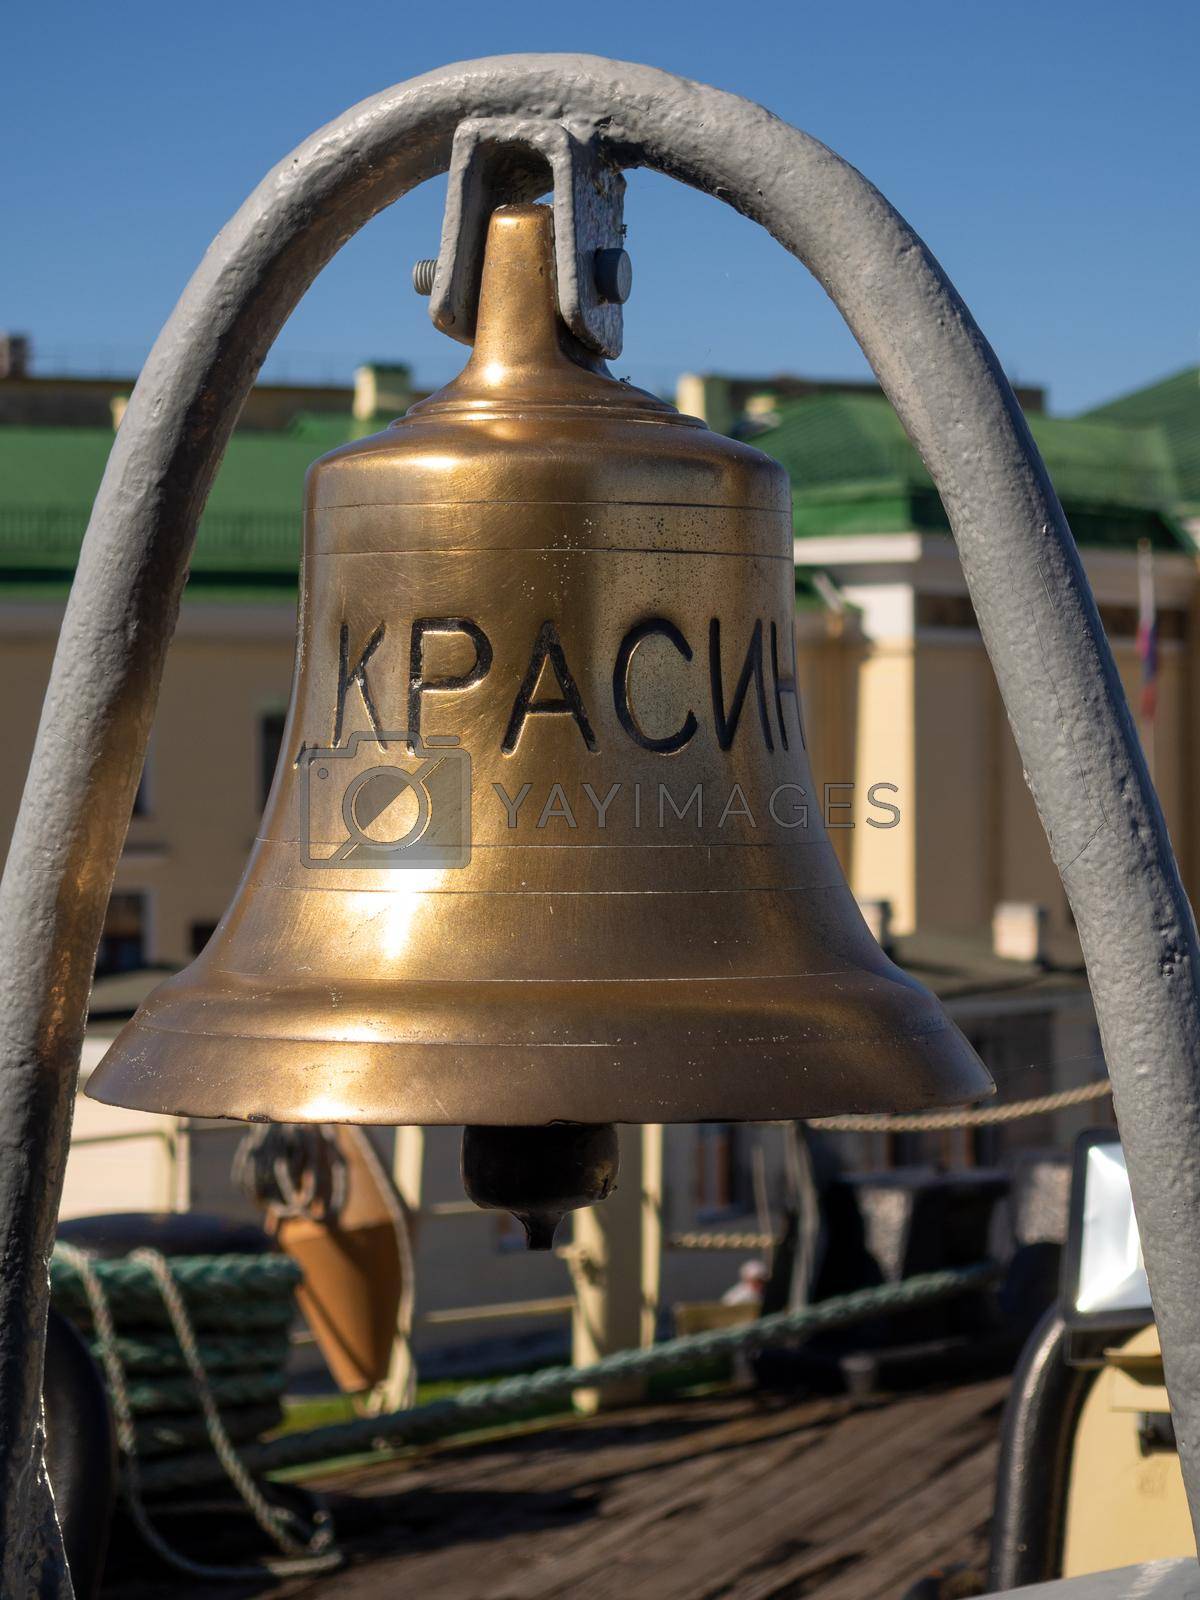 SAINT PETERSBURG, RUSSIA - 07 26 20: ship's bell on the Krasin icebreaker